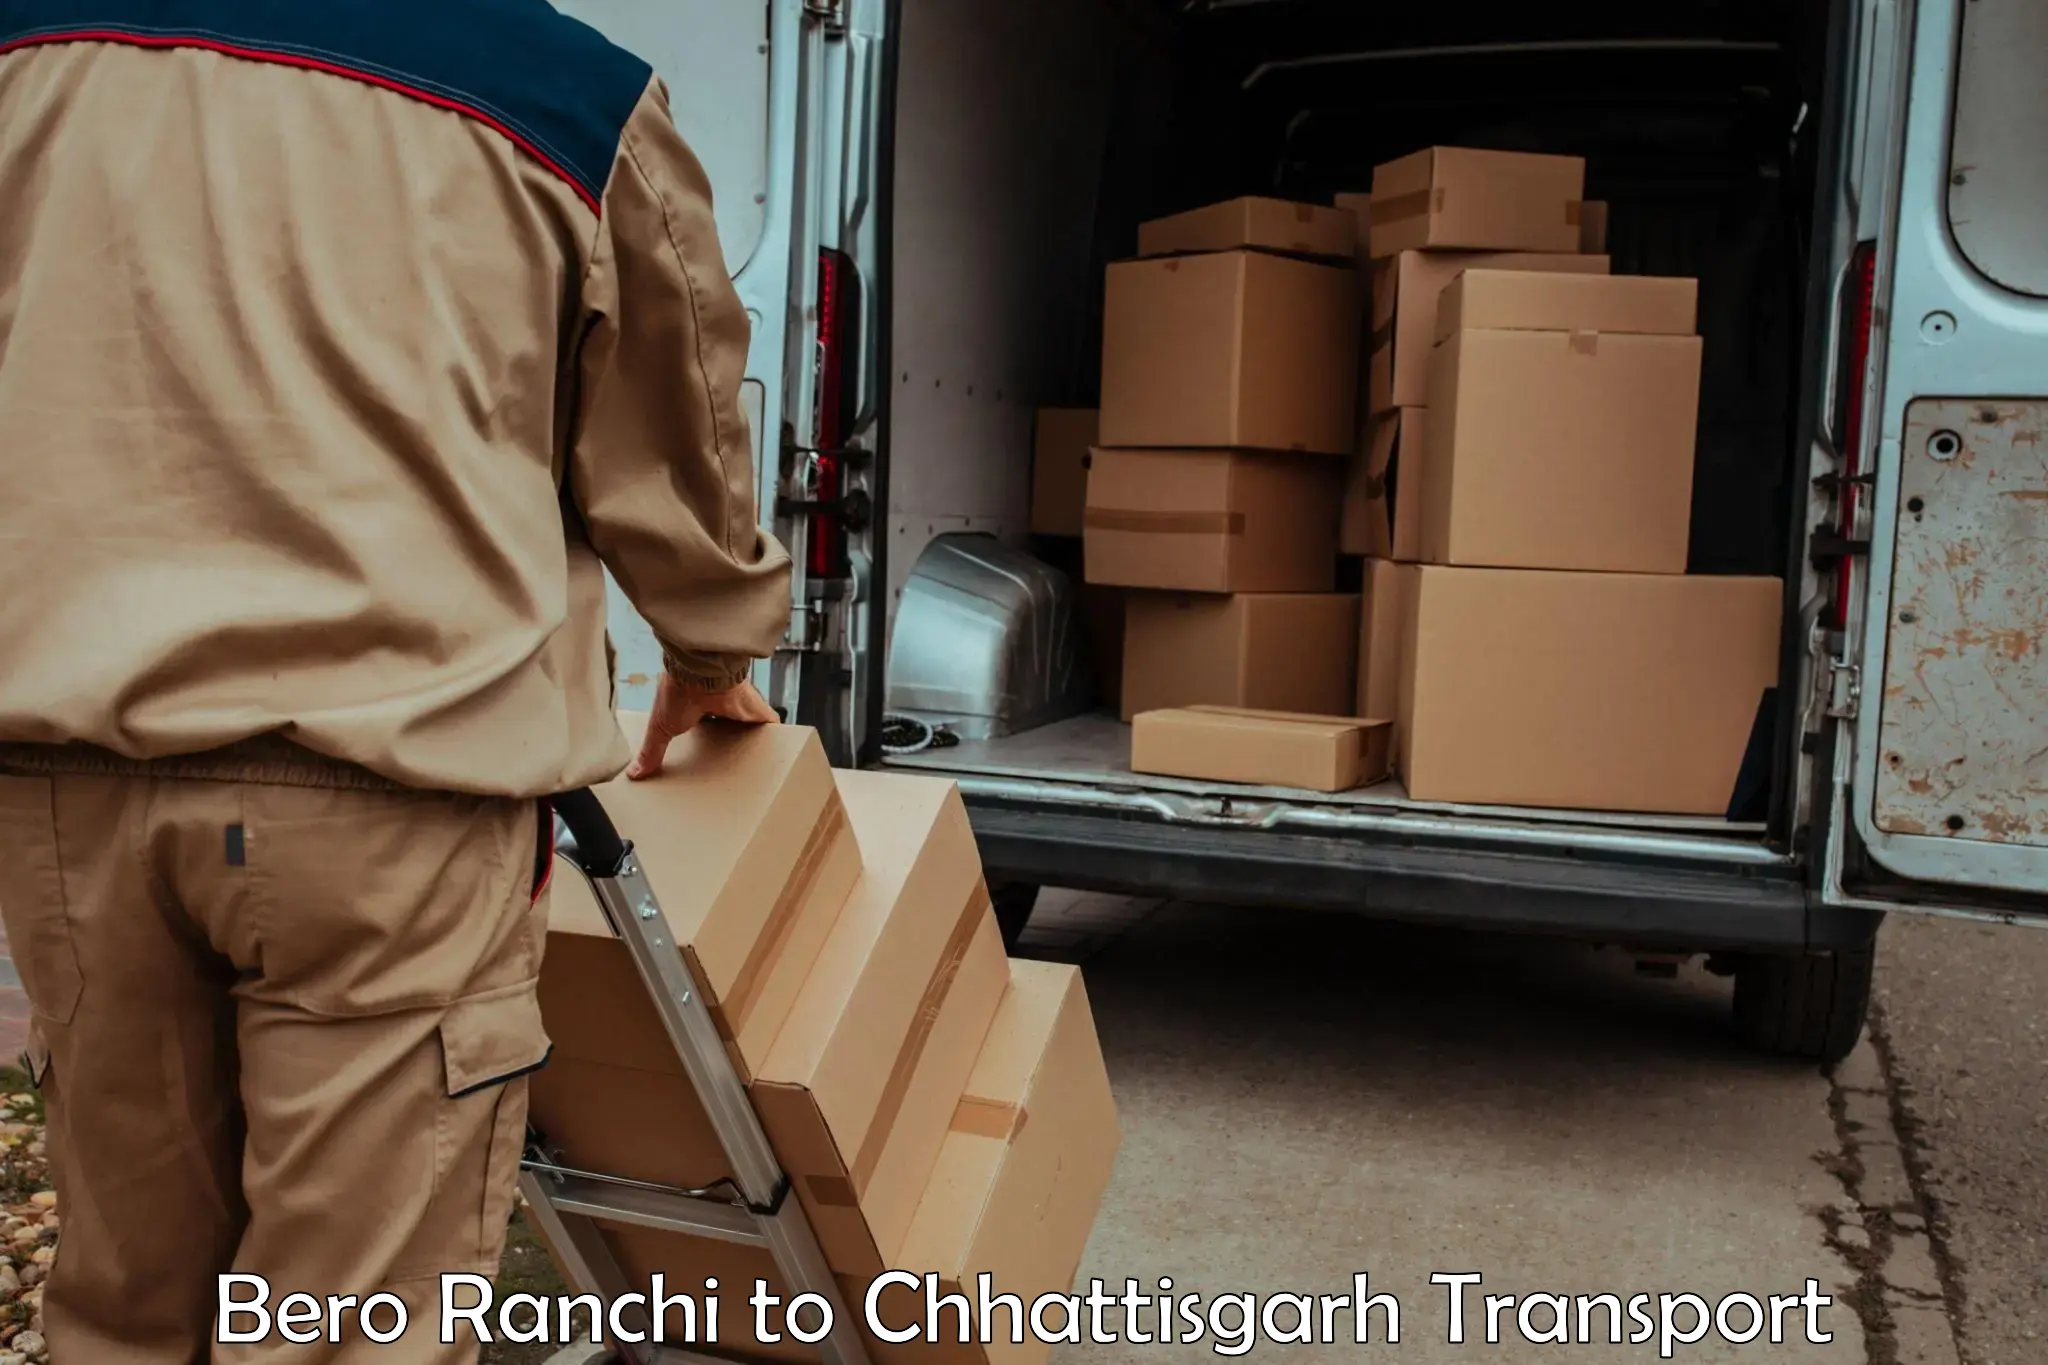 Commercial transport service Bero Ranchi to Patna Chhattisgarh